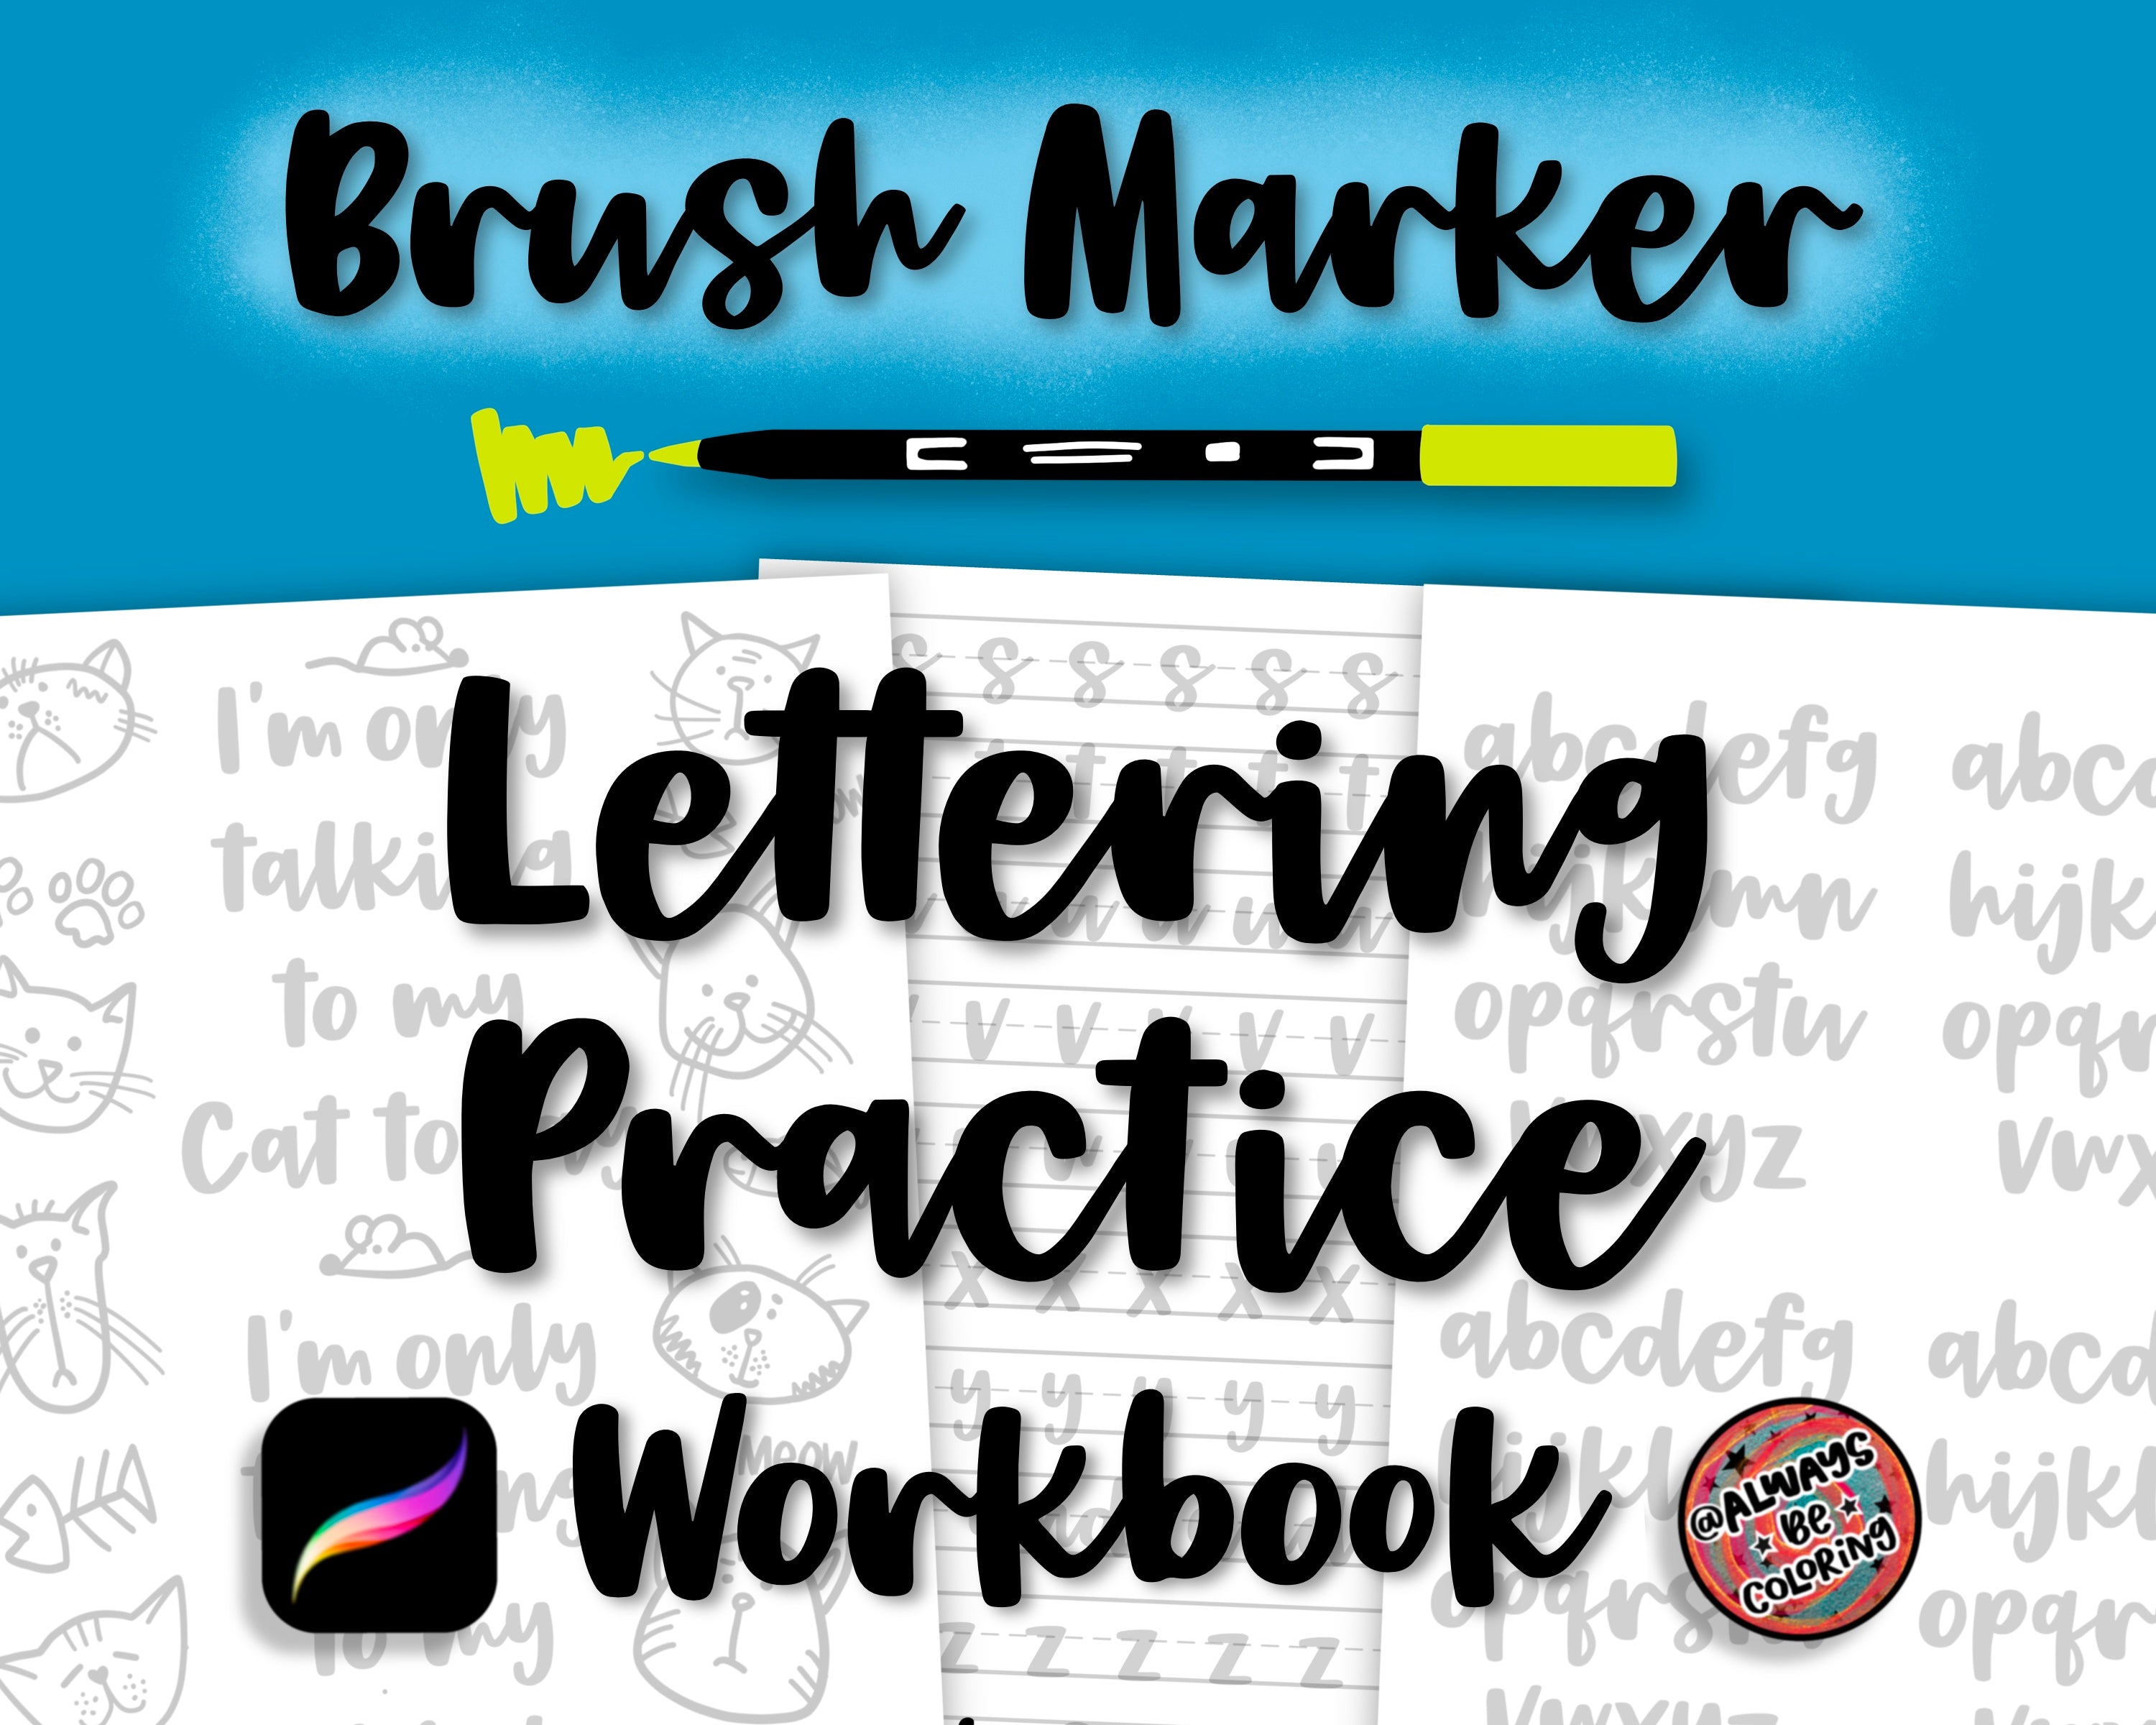 Lettering Practice Workbook, Procreate, iPad Lettering, Workbook, Practice  sheet, Procreate